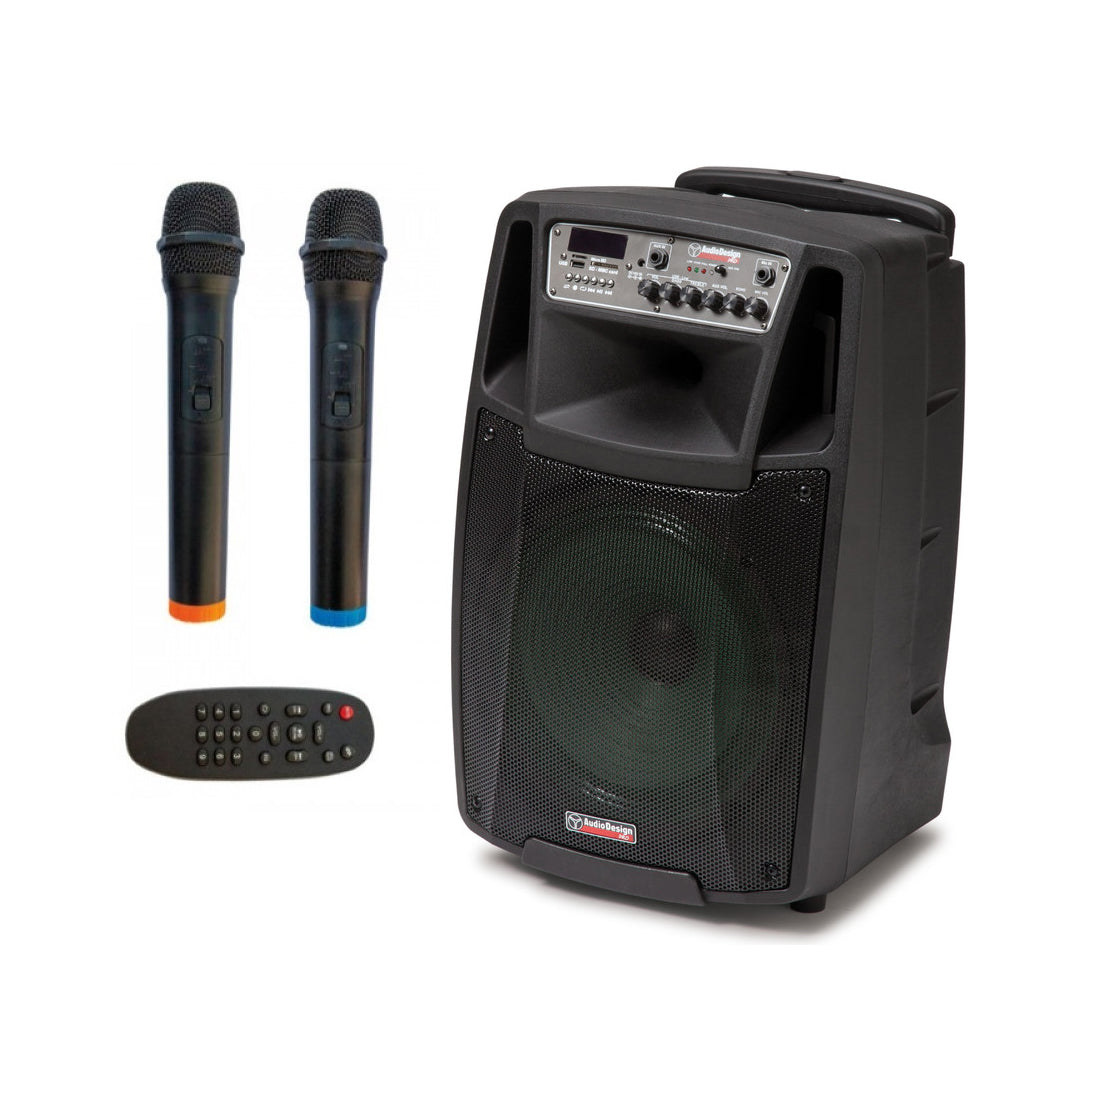 Audiodesign Pro Portable battery-powered active speaker, active speaker with wireless microphones, 380mm woofer speaker, bluetooth speaker